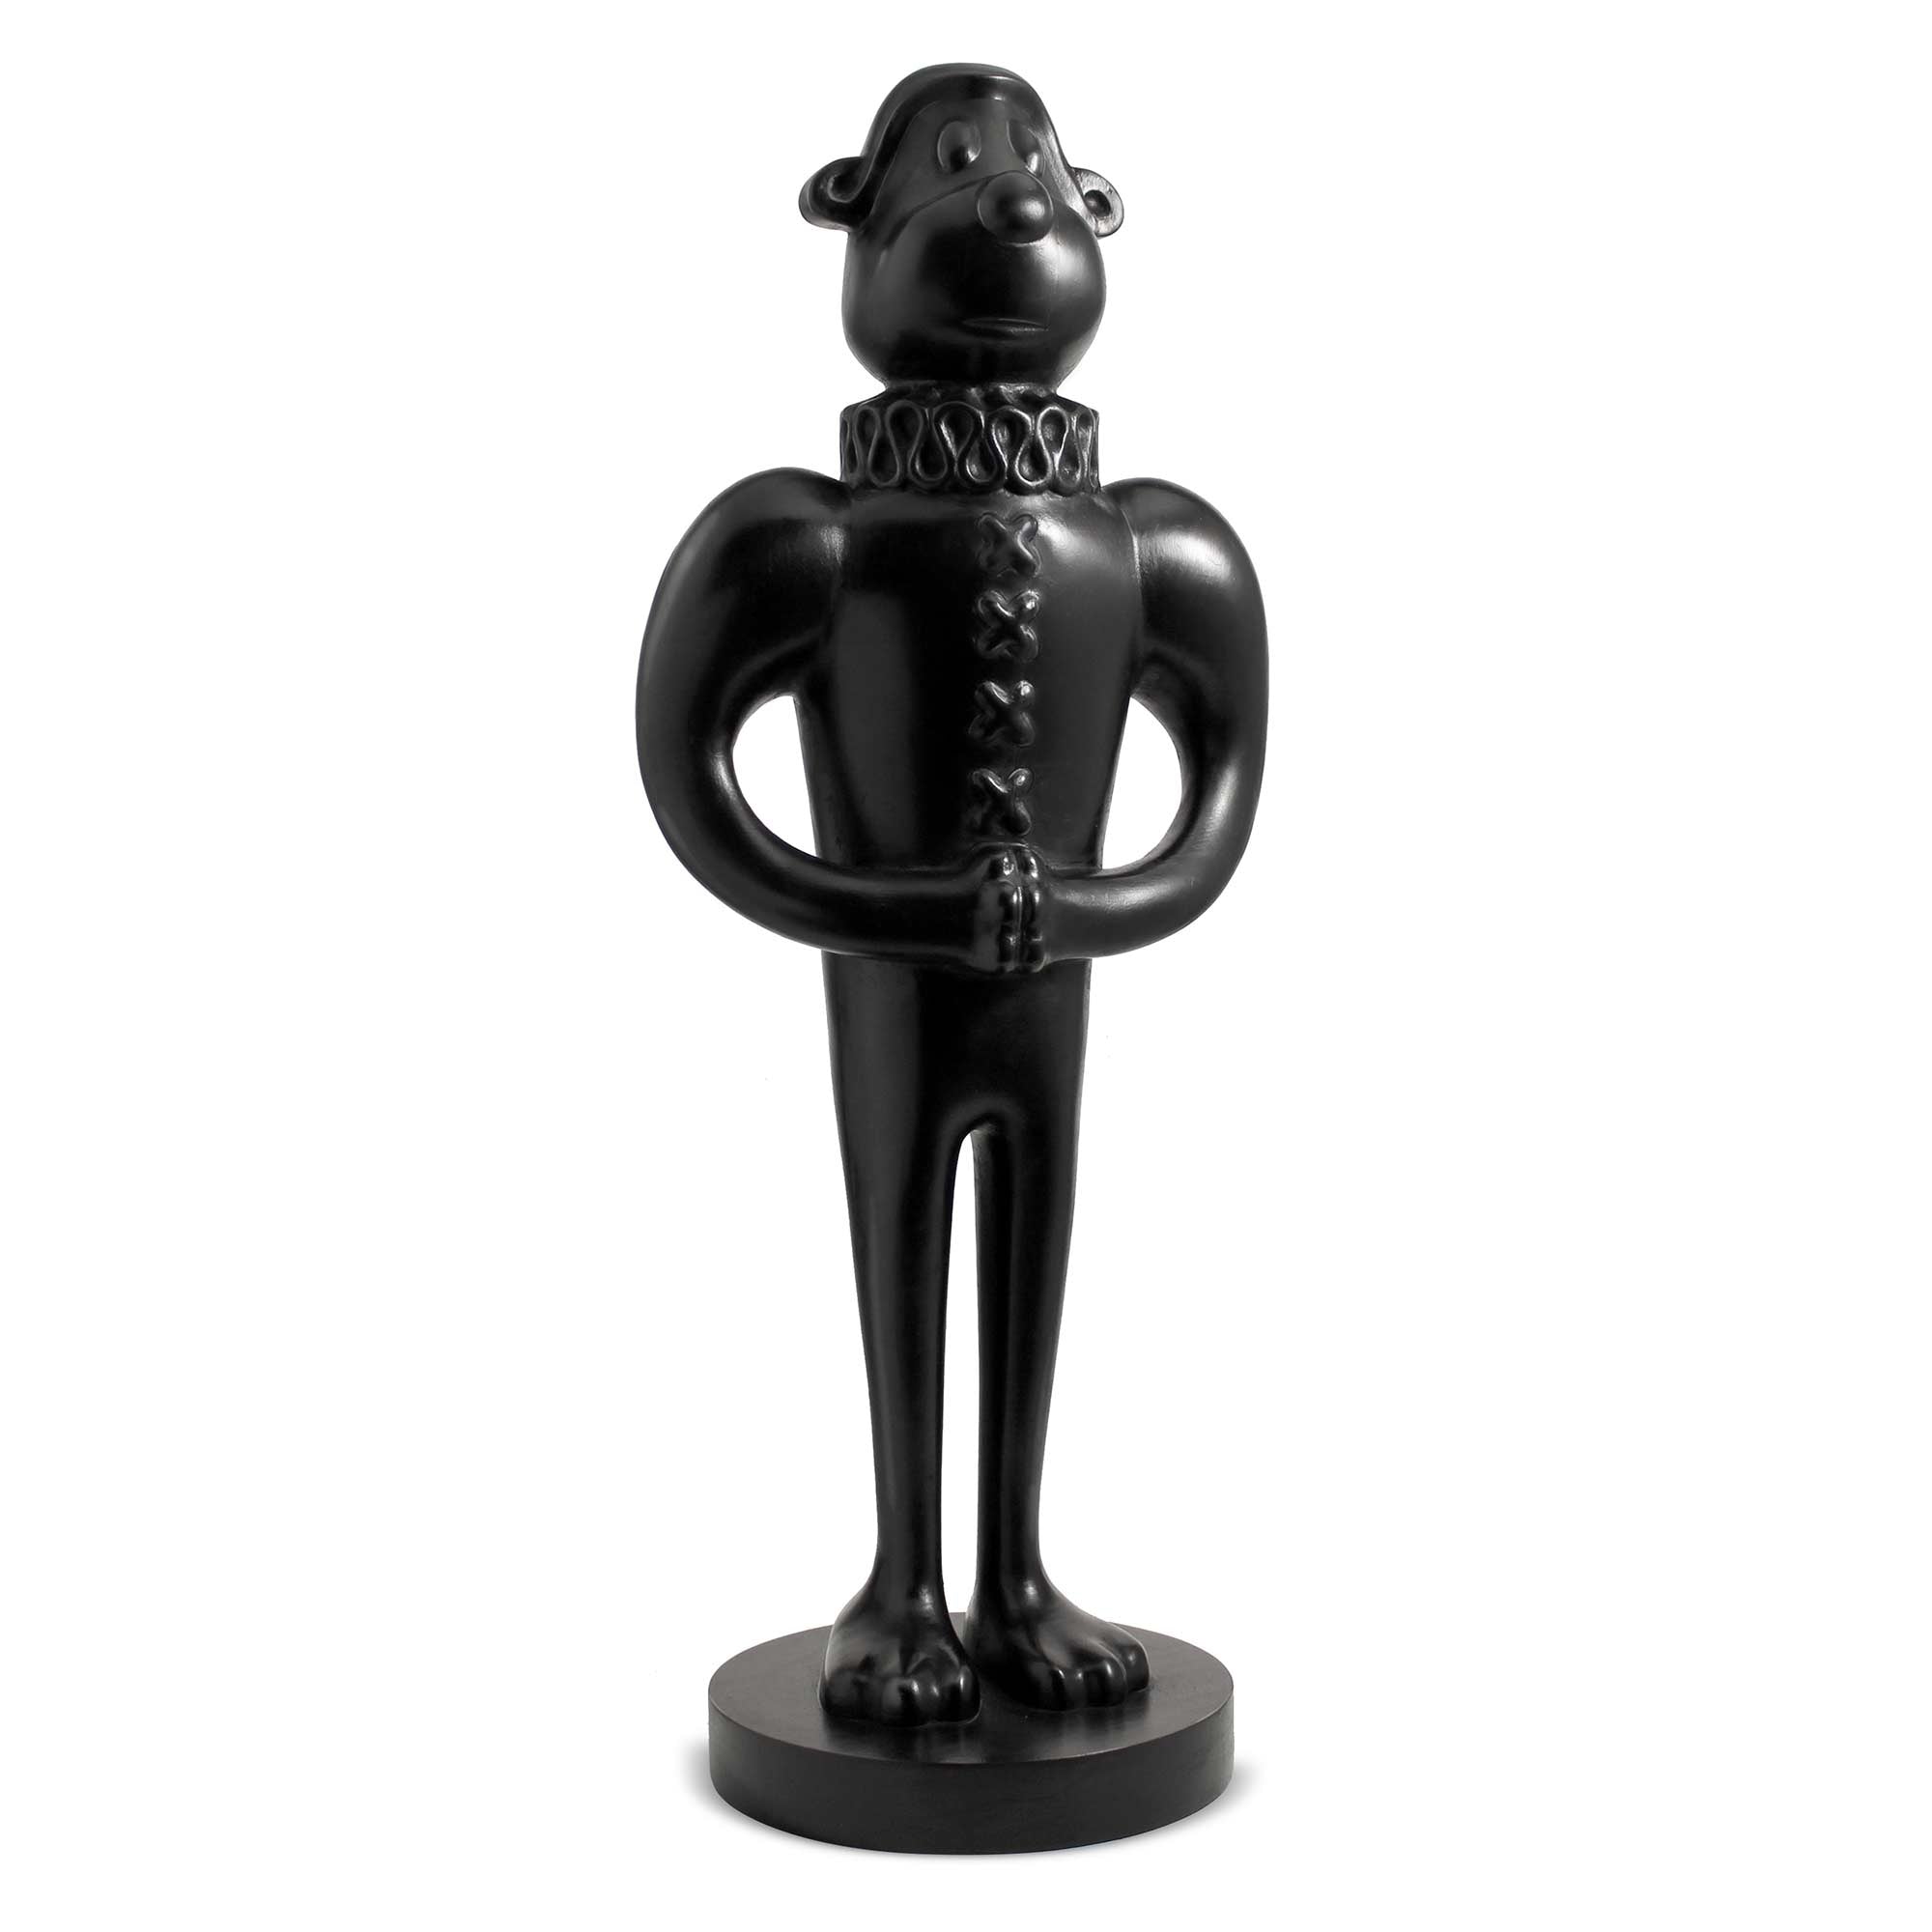 William, dog wood sculpture with black polished, by artist Ferdi B Dick, 